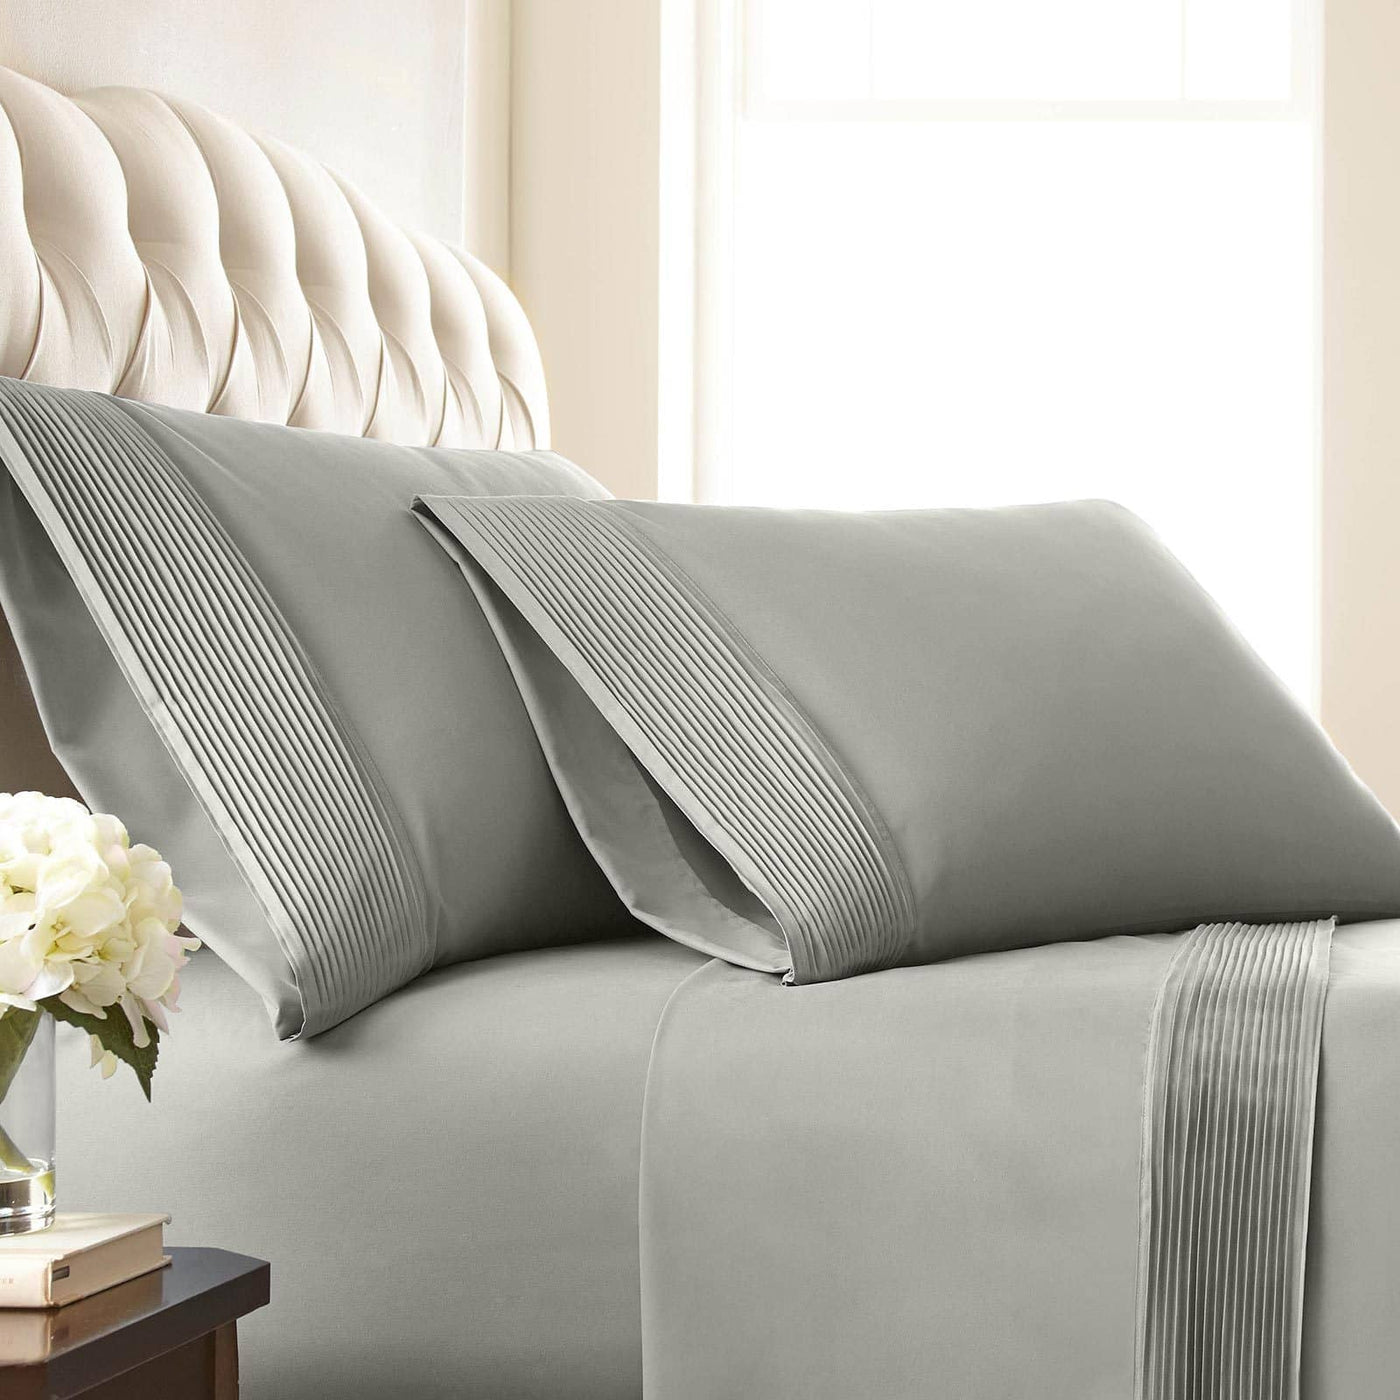 Vilano Springs Pleated Hem Pillow Cases in Steel Grey#color_vilano-steel-gray